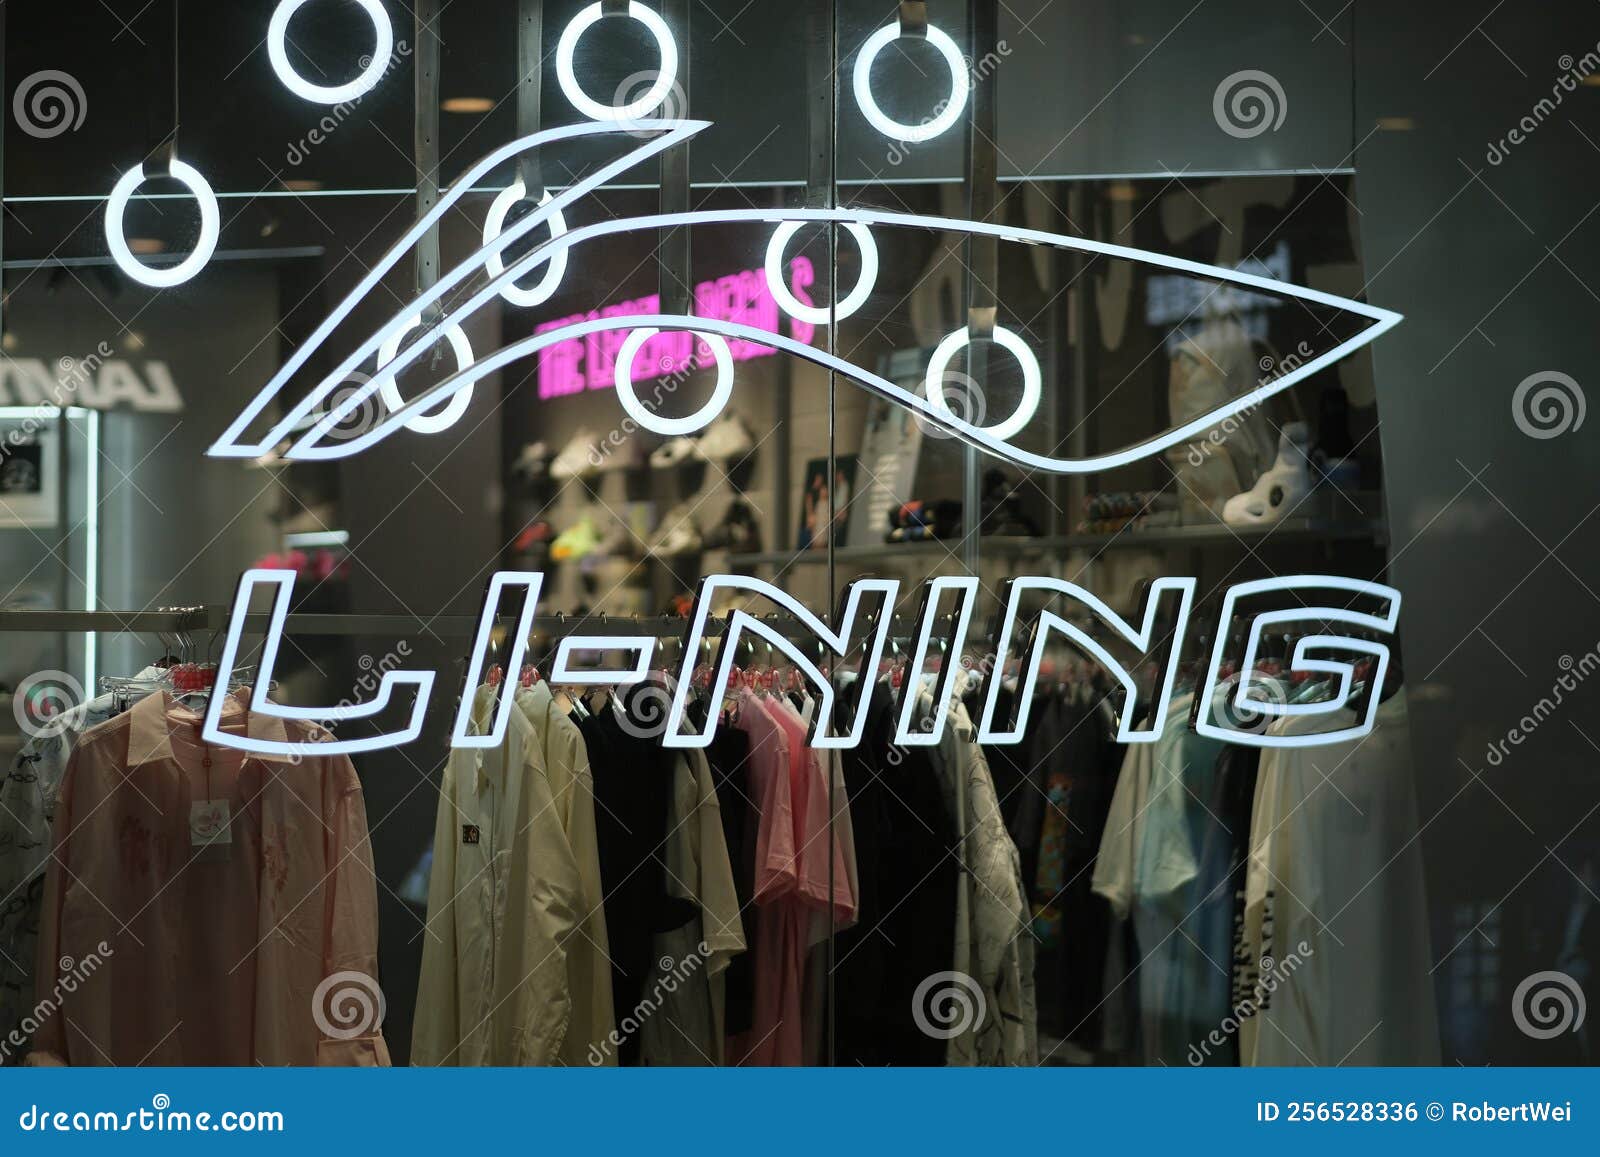 Li-ning Clothing Store At Taikooli,Chengdu Editorial Image ...